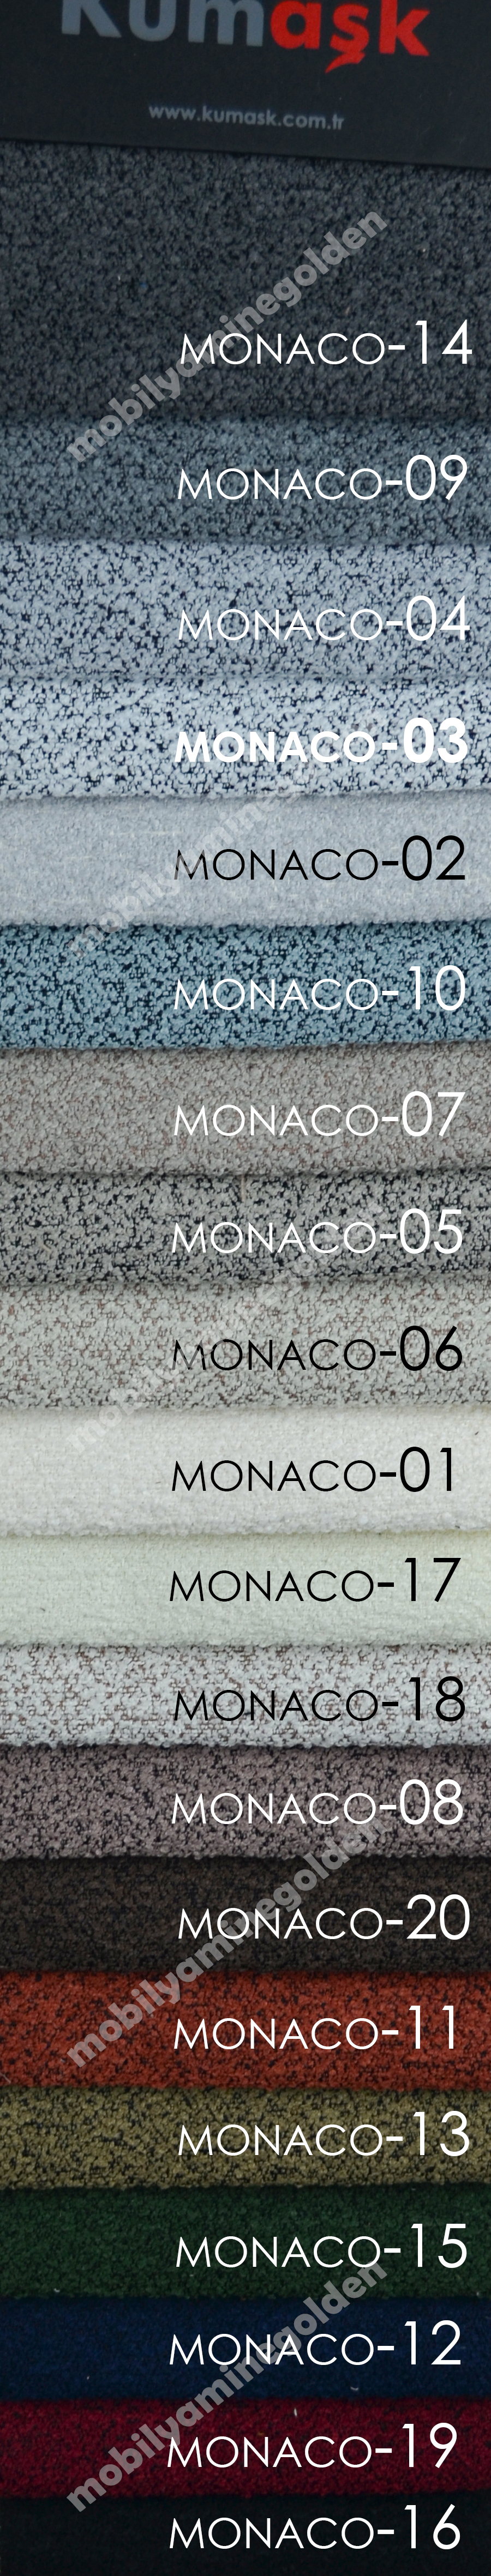 Kumaşk Monaco yazılı.jpg (3.00 MB)